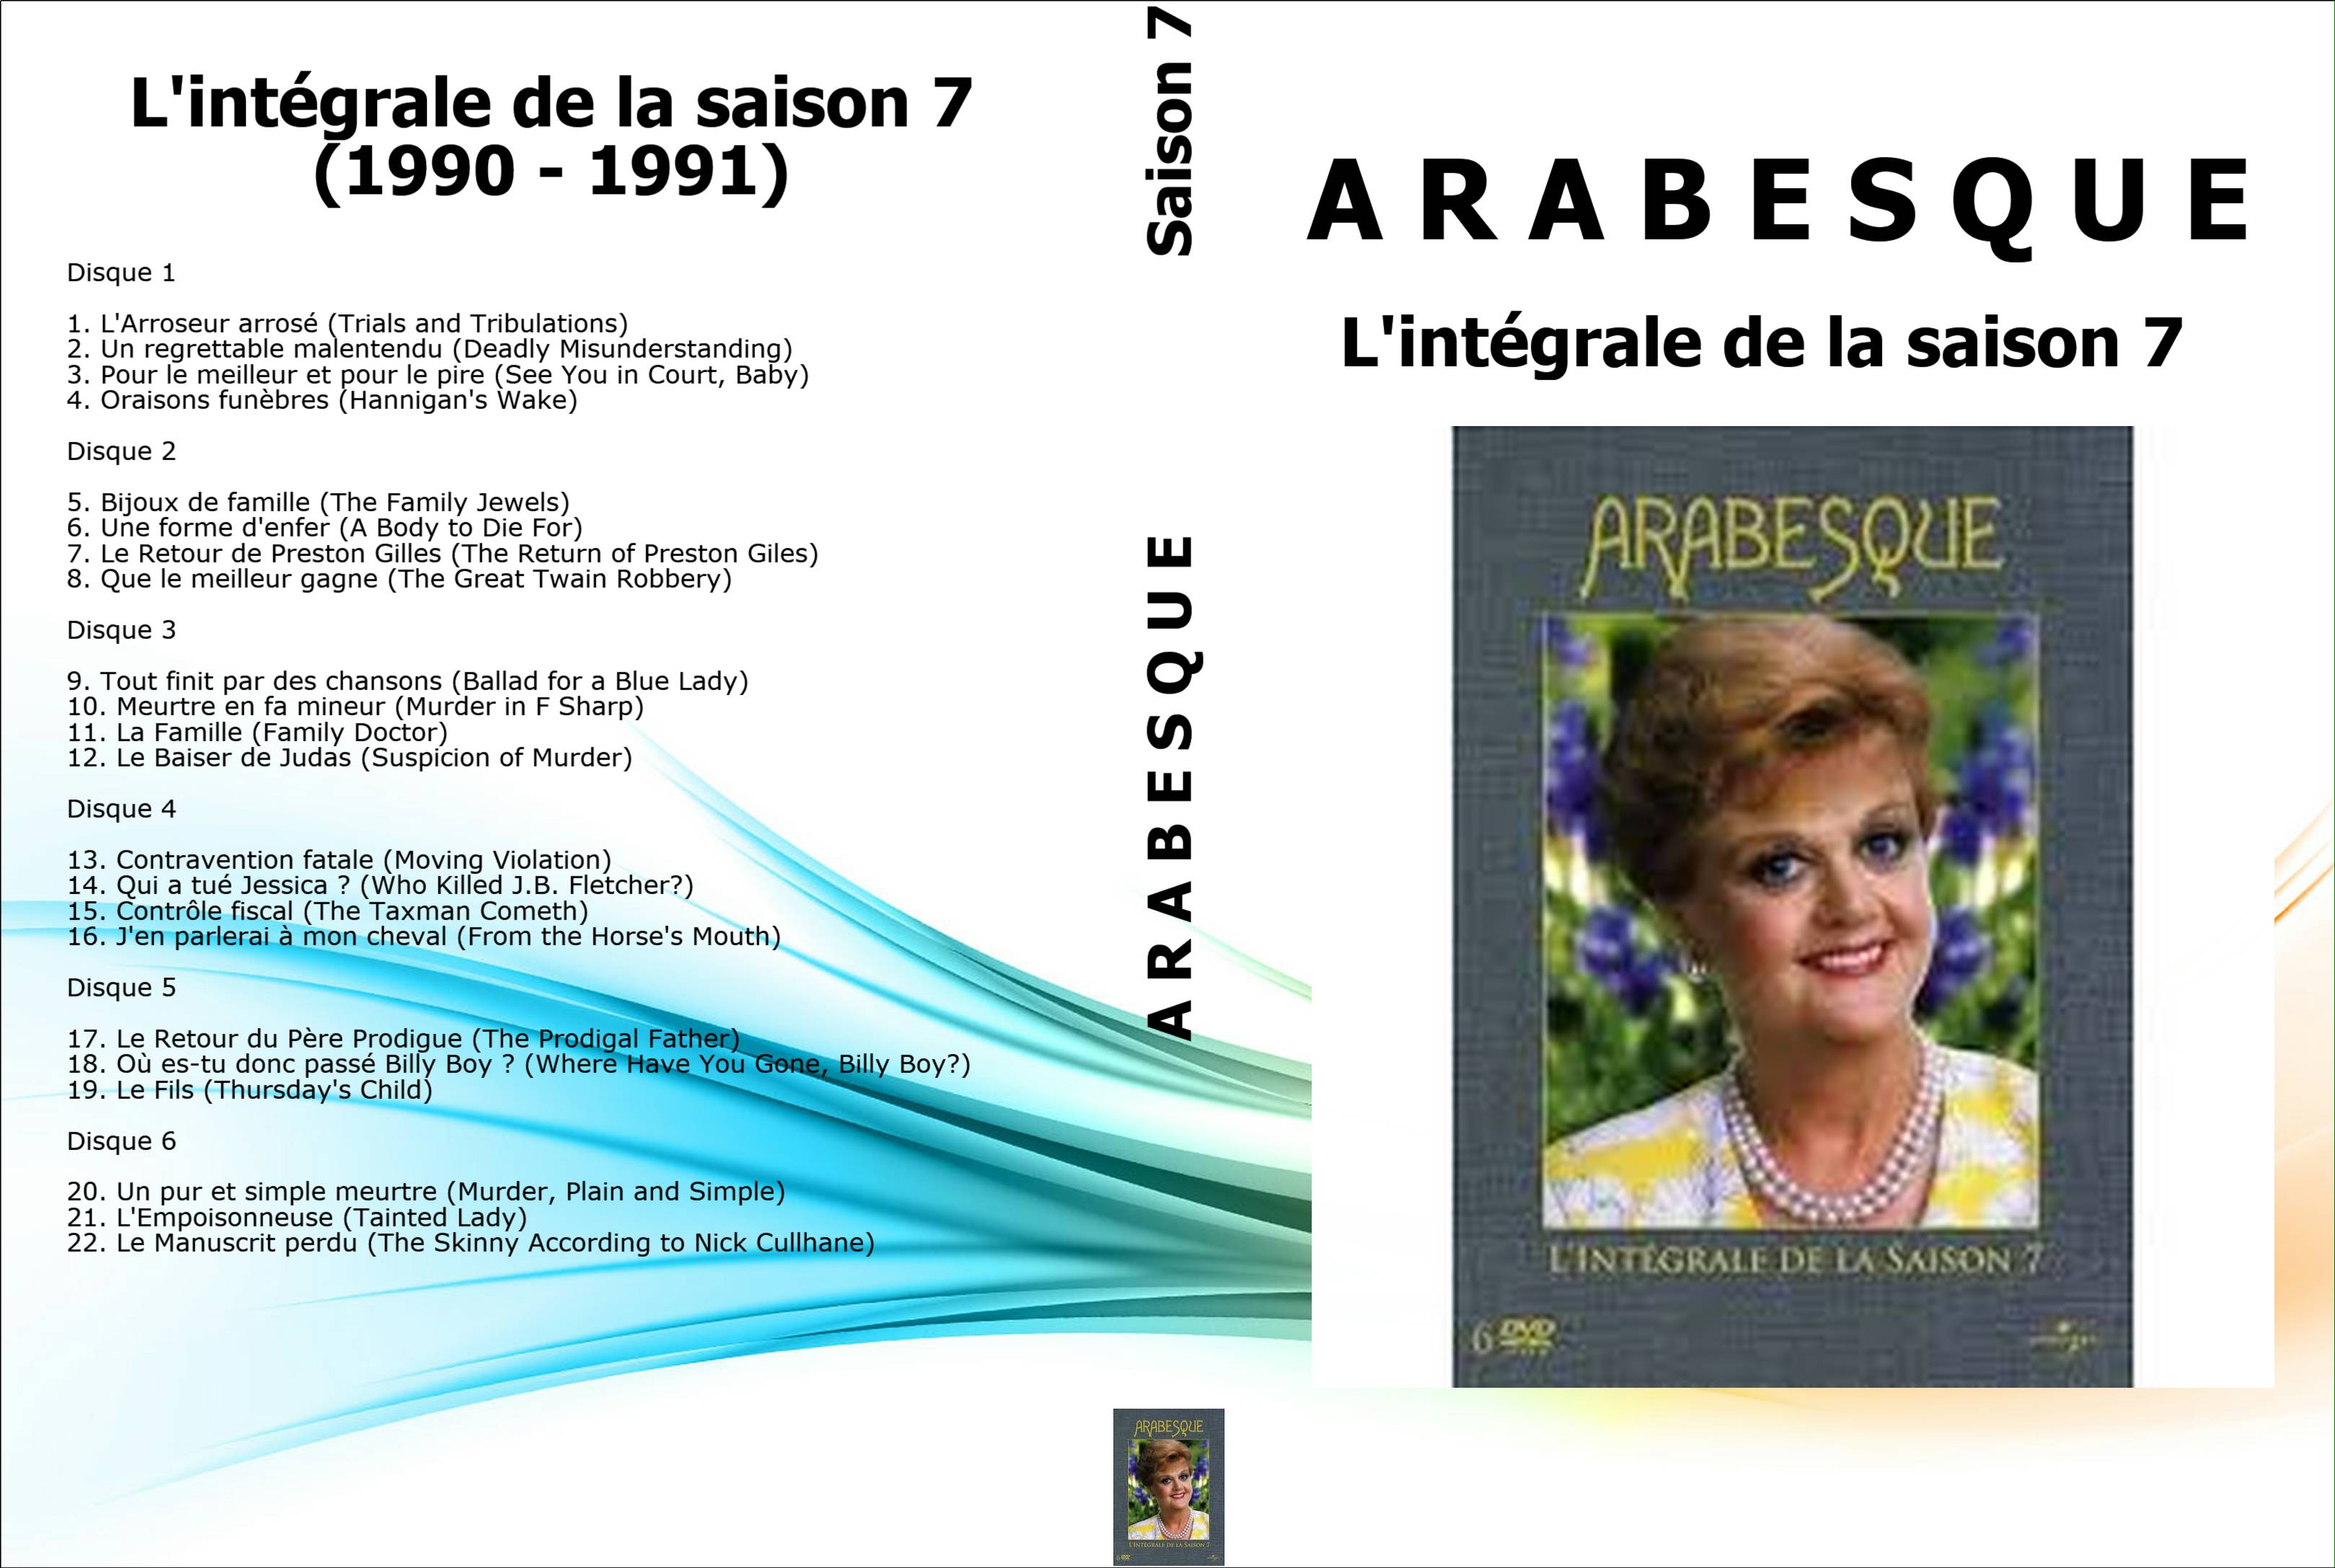 Jaquette DVD Arabesque saison 7 custom